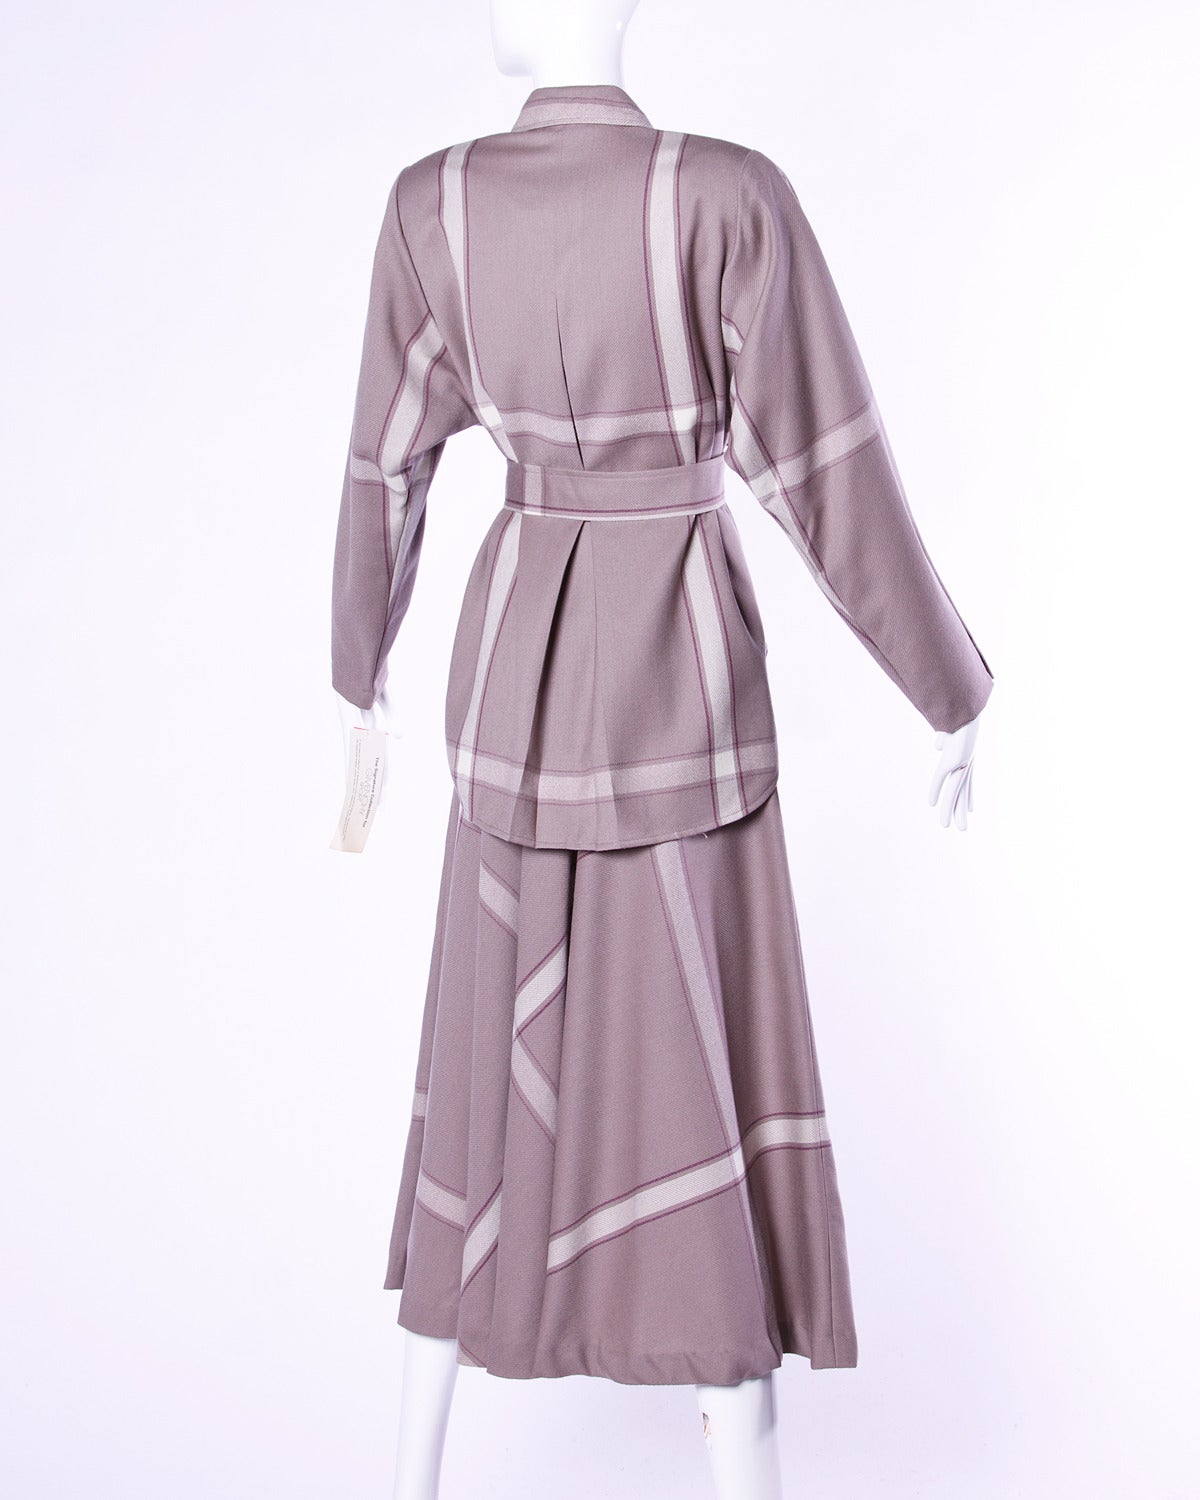 Women's Unworn Givenchy Vintage 3-Piece Plaid Wool Skirt, Top and Belt Ensemble